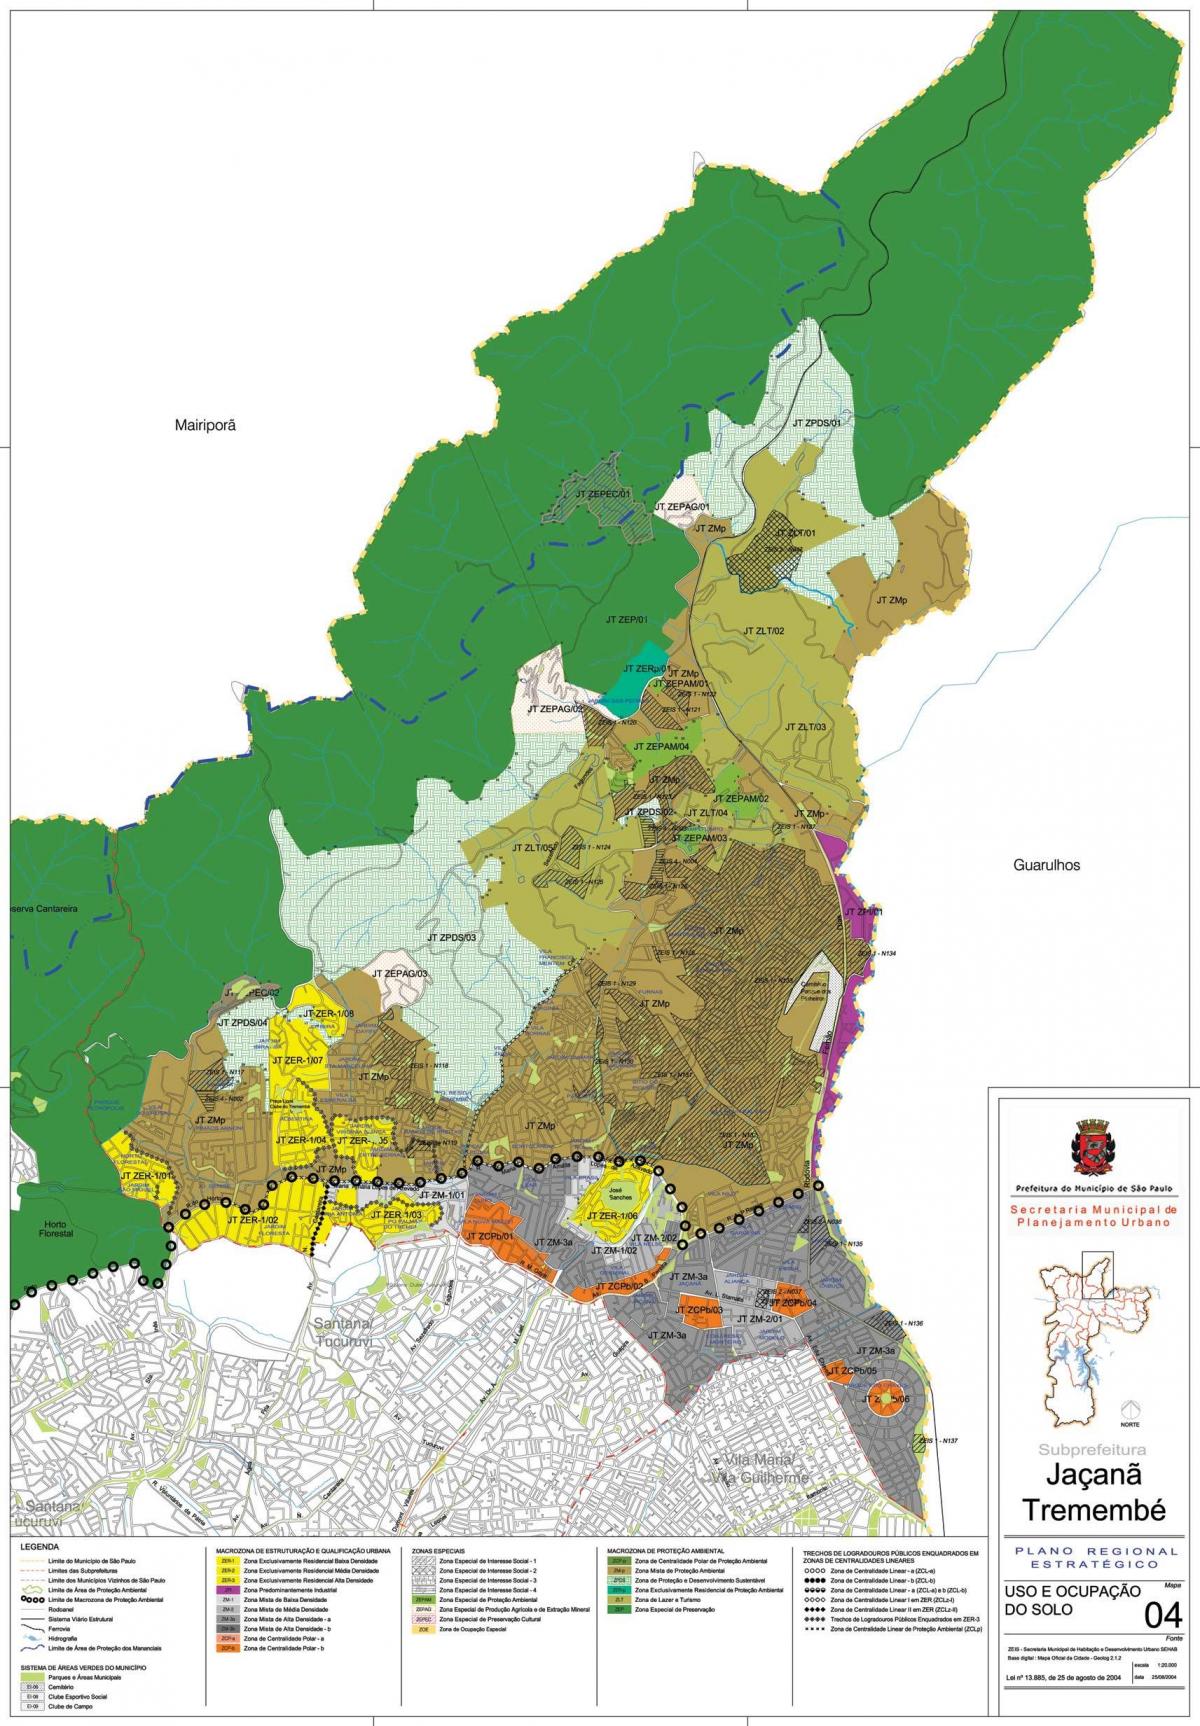 Mapa Jaçanã-Tremembé São Paulo - lurzoruaren Okupazioa